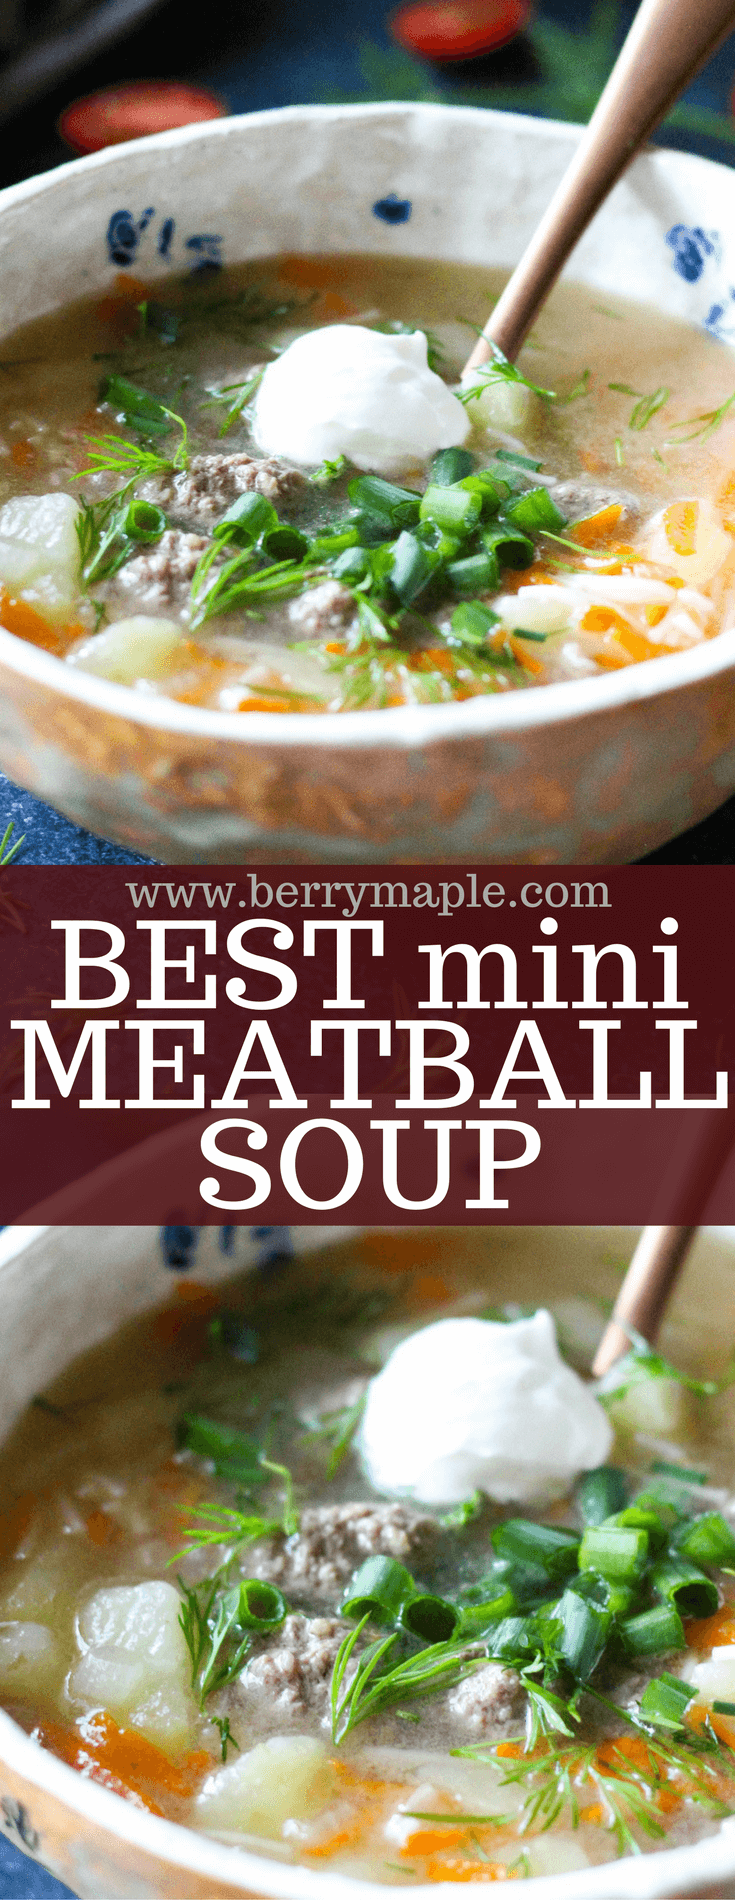 Winter mini meatball soup - Berry&Maple